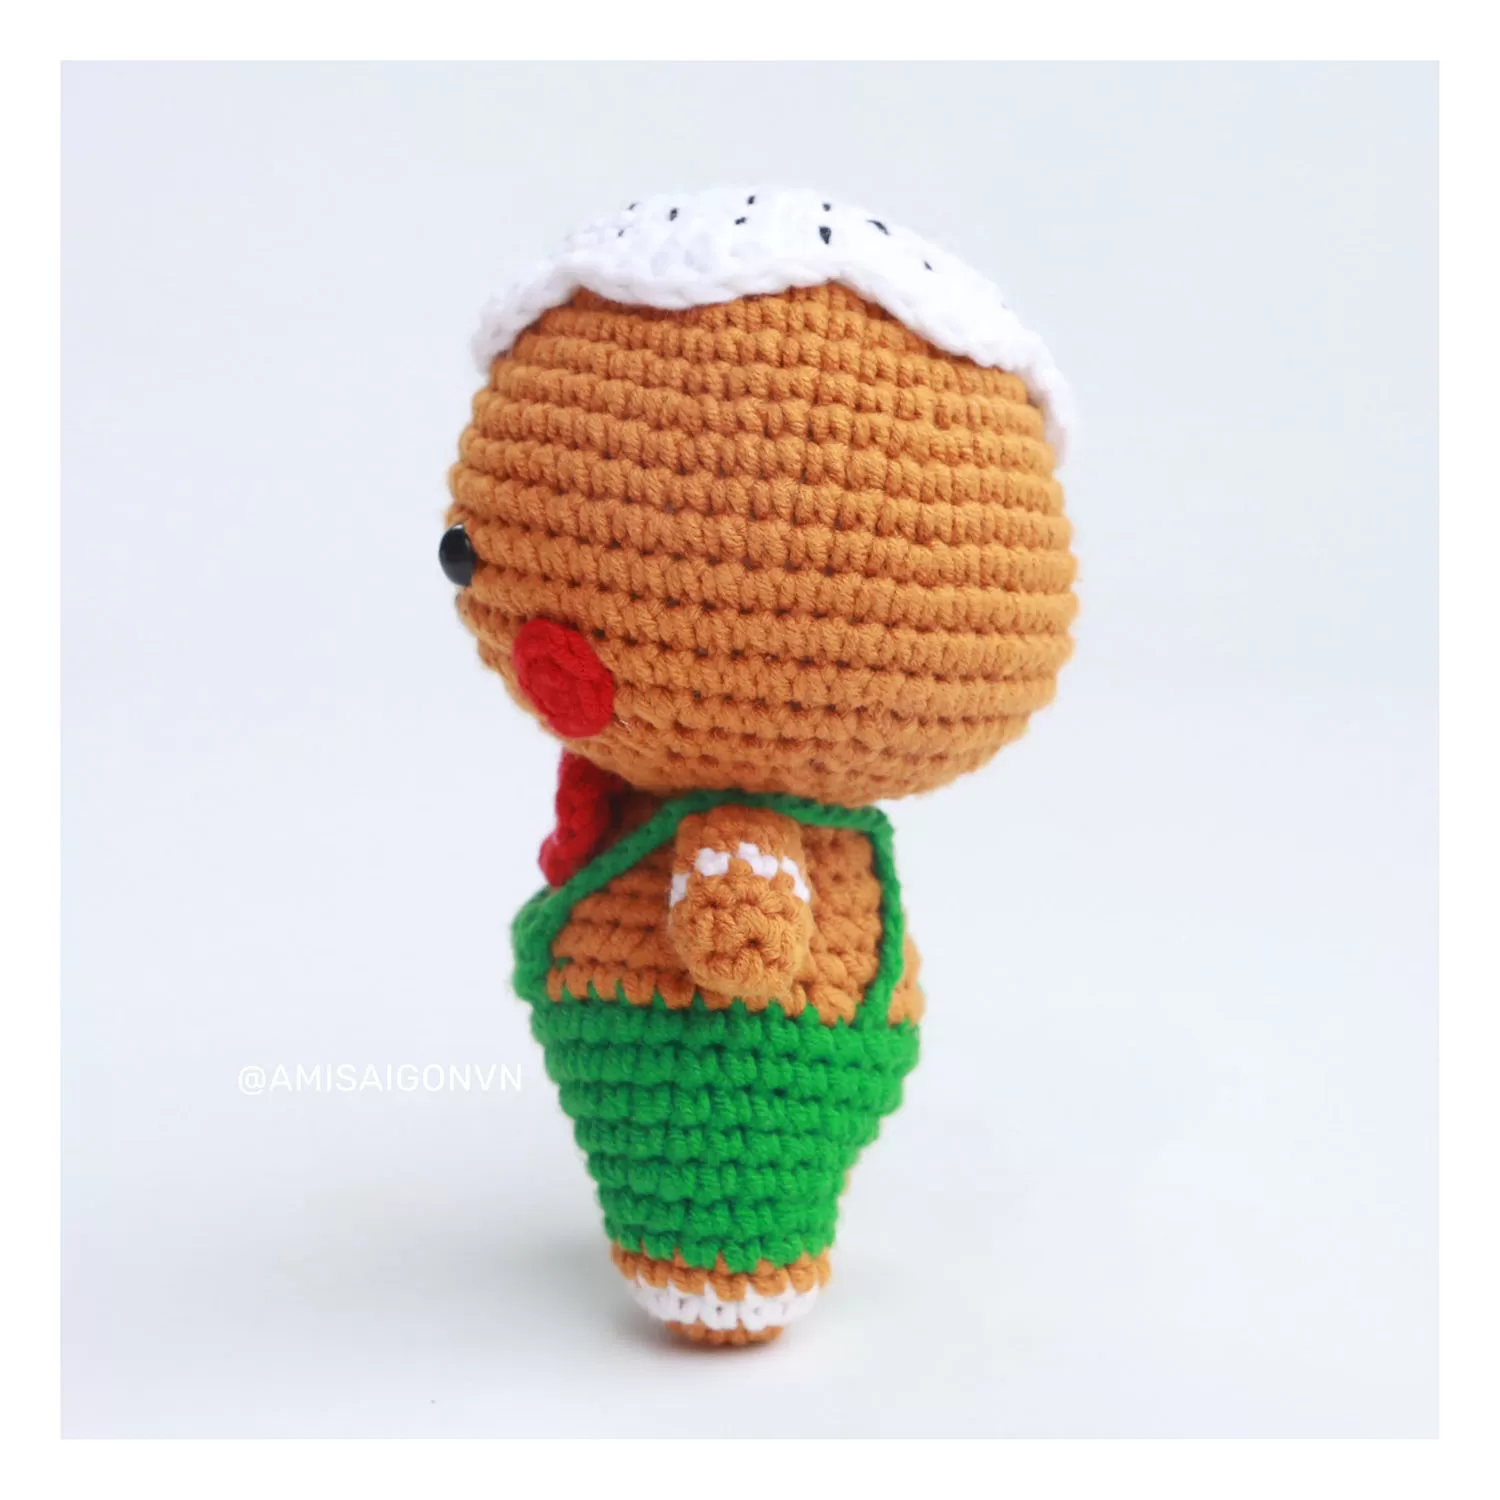 Gingerbread Man Amigurumi | Crochet Pattern | Amigurumi Tutorial PDF in English | AmiSaigon